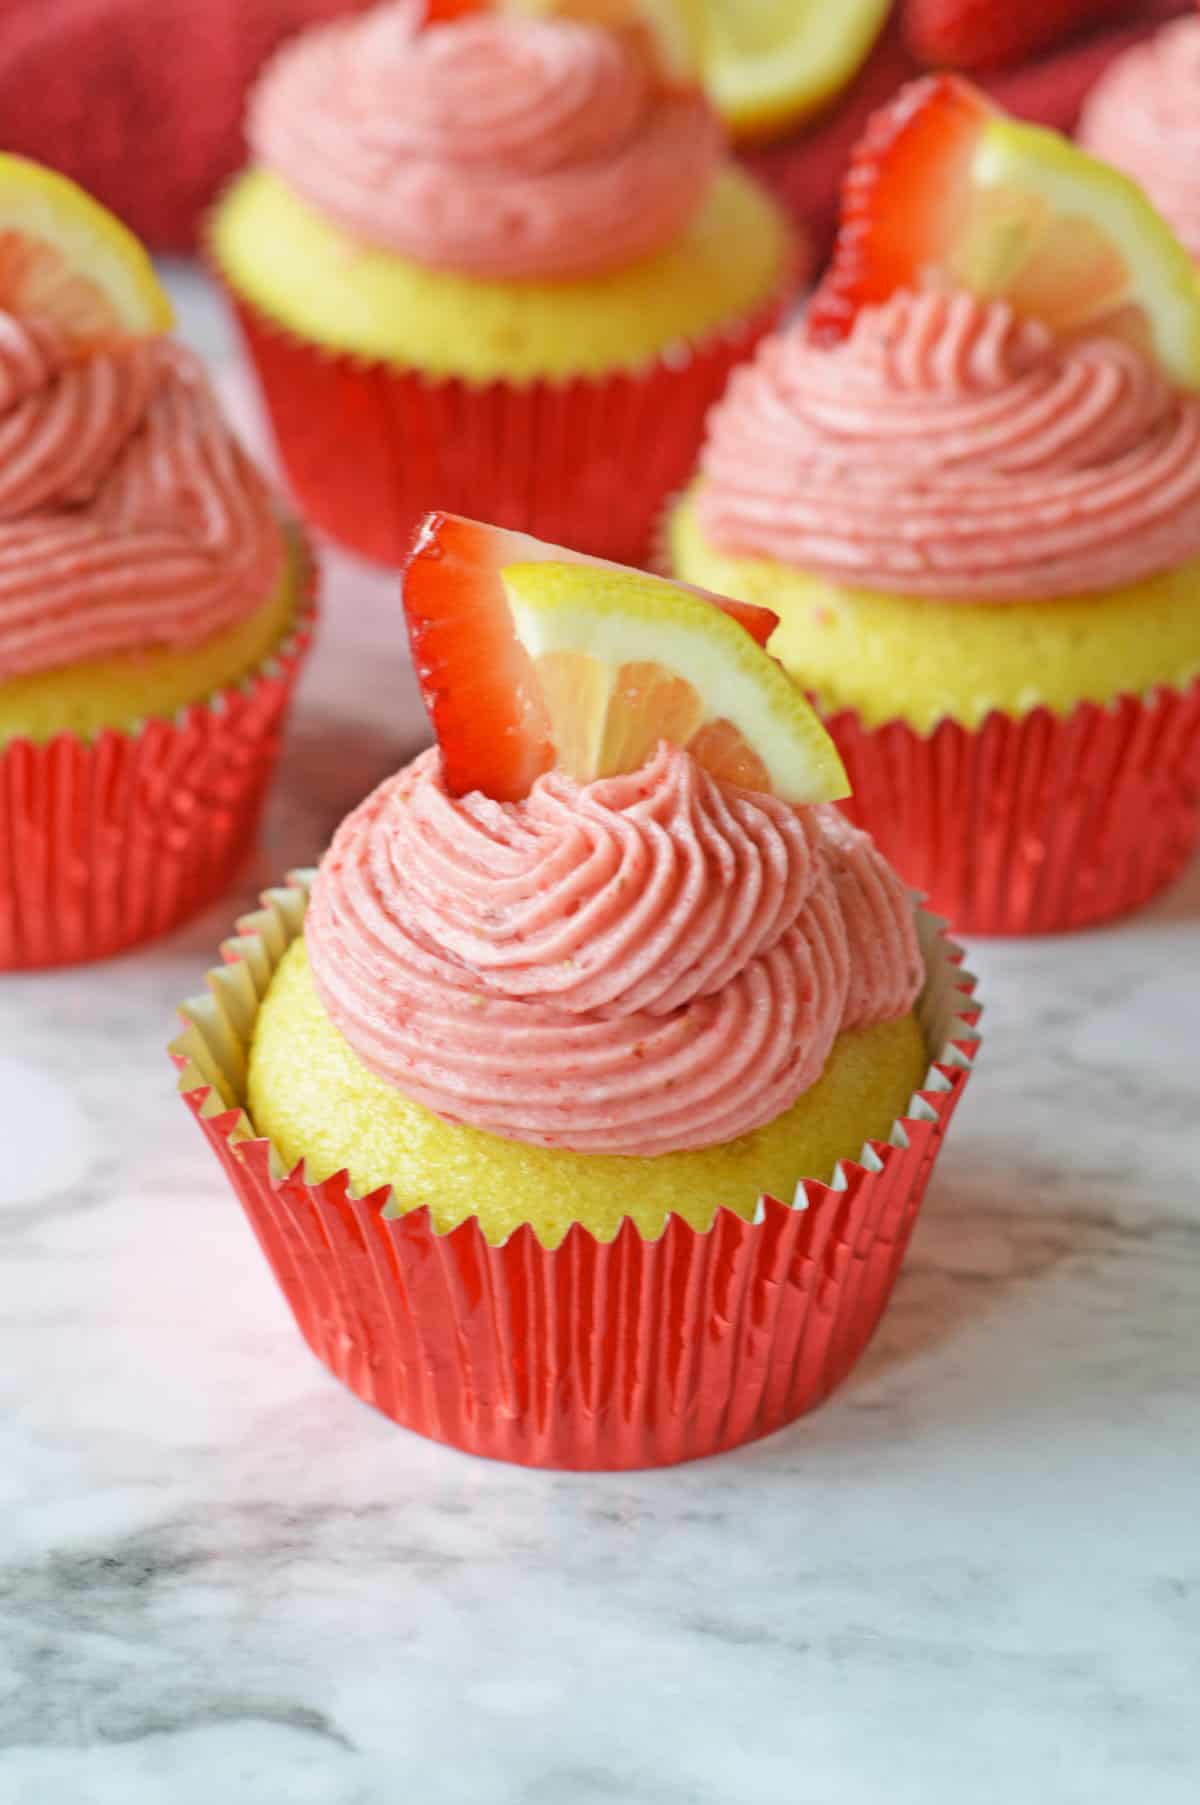 Strawberry lemonade cupcakes garnished with fresh lemon and strawberries.